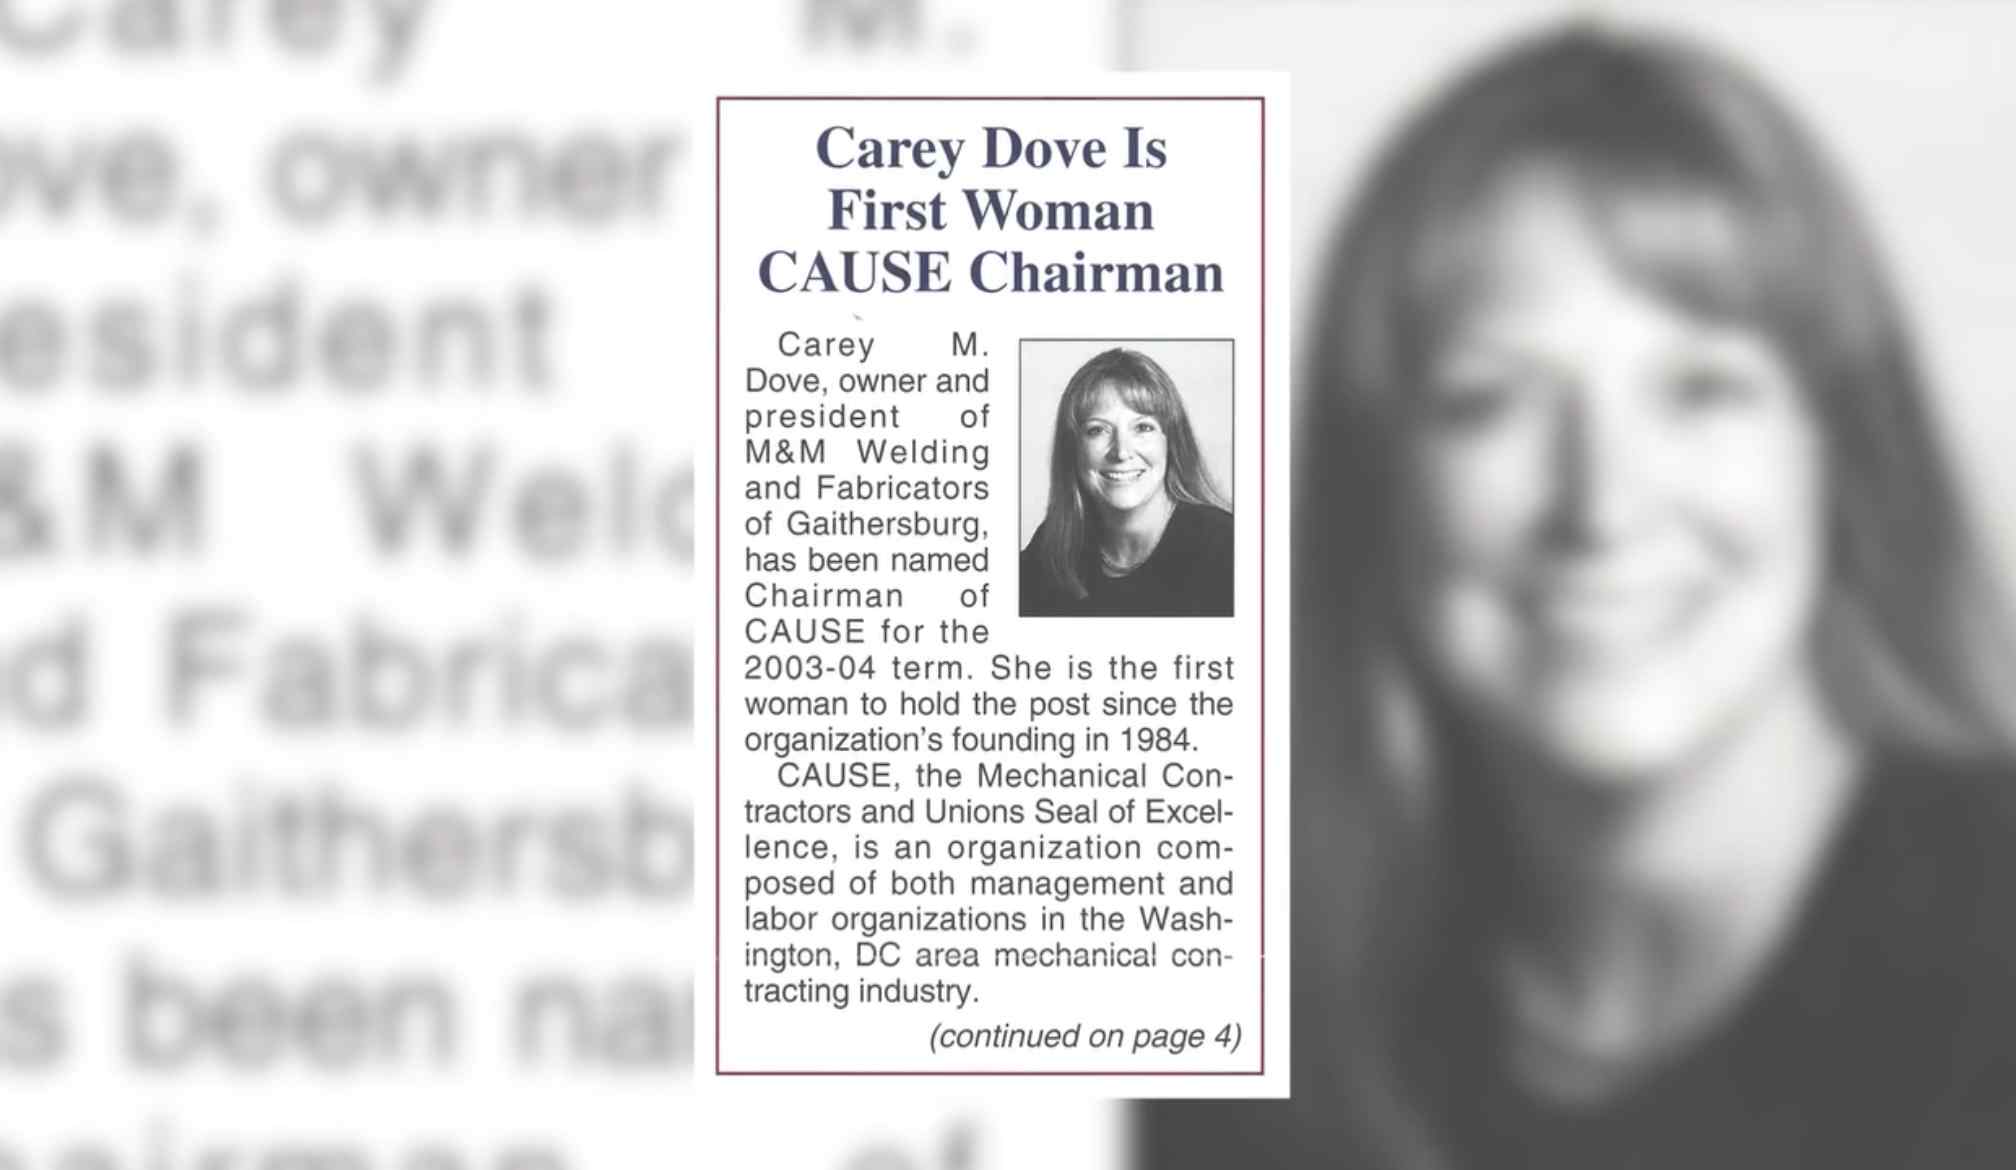 Carey Dove, President/Owner